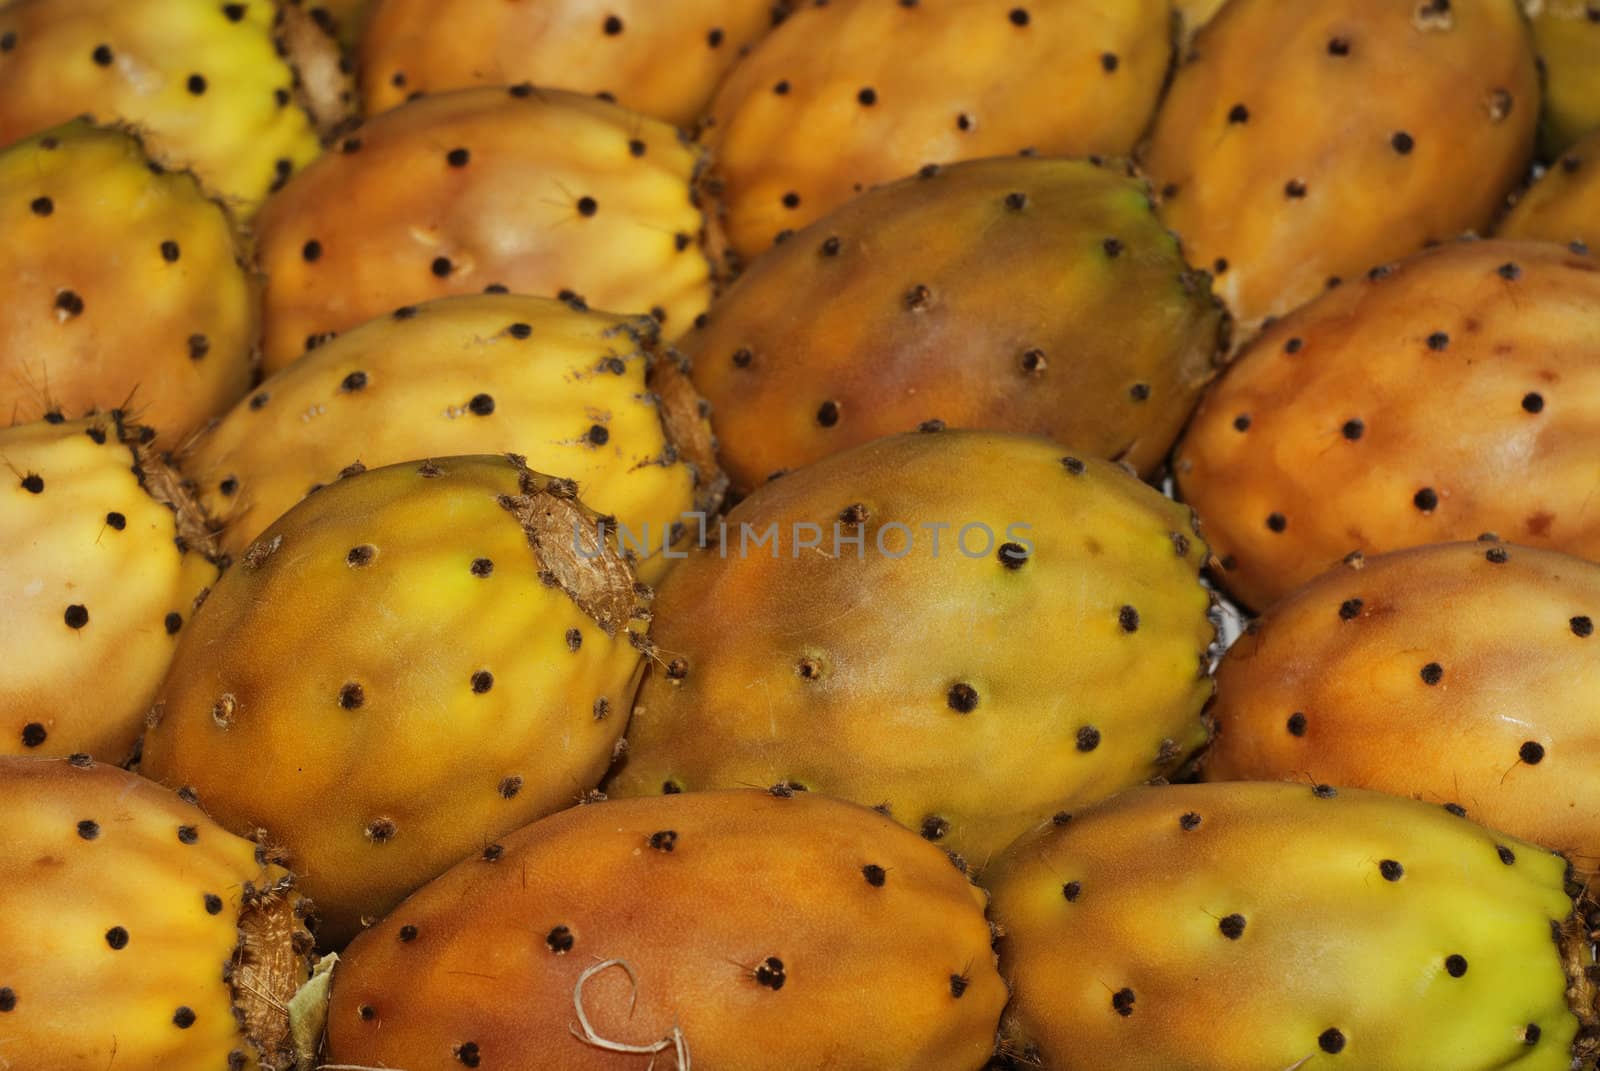 Prickly pears by gandolfocannatella